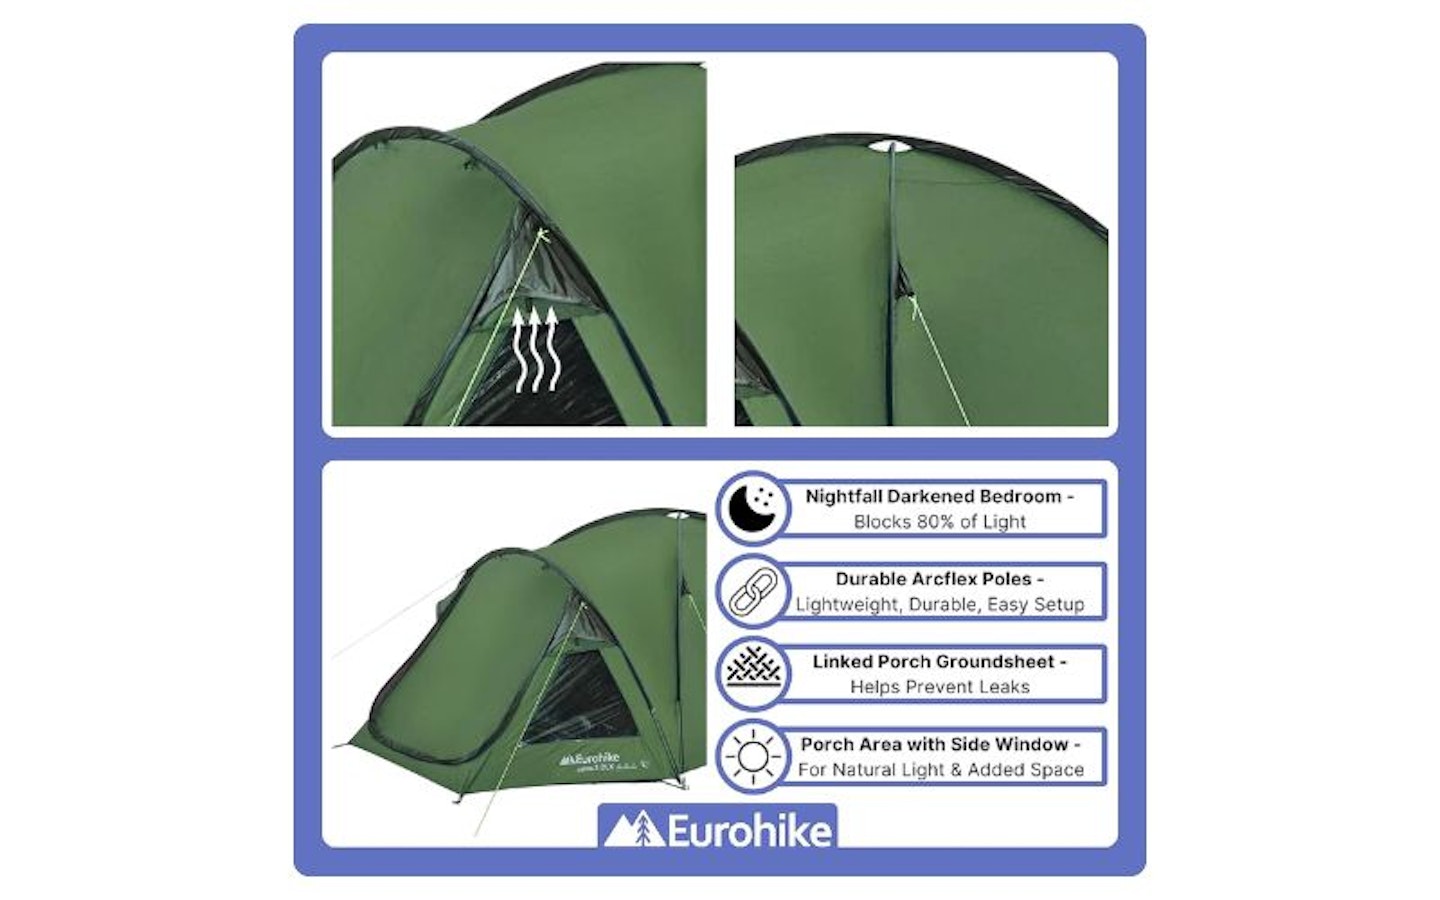 Eurohike Cairns 3 DLX Nightfall Tent